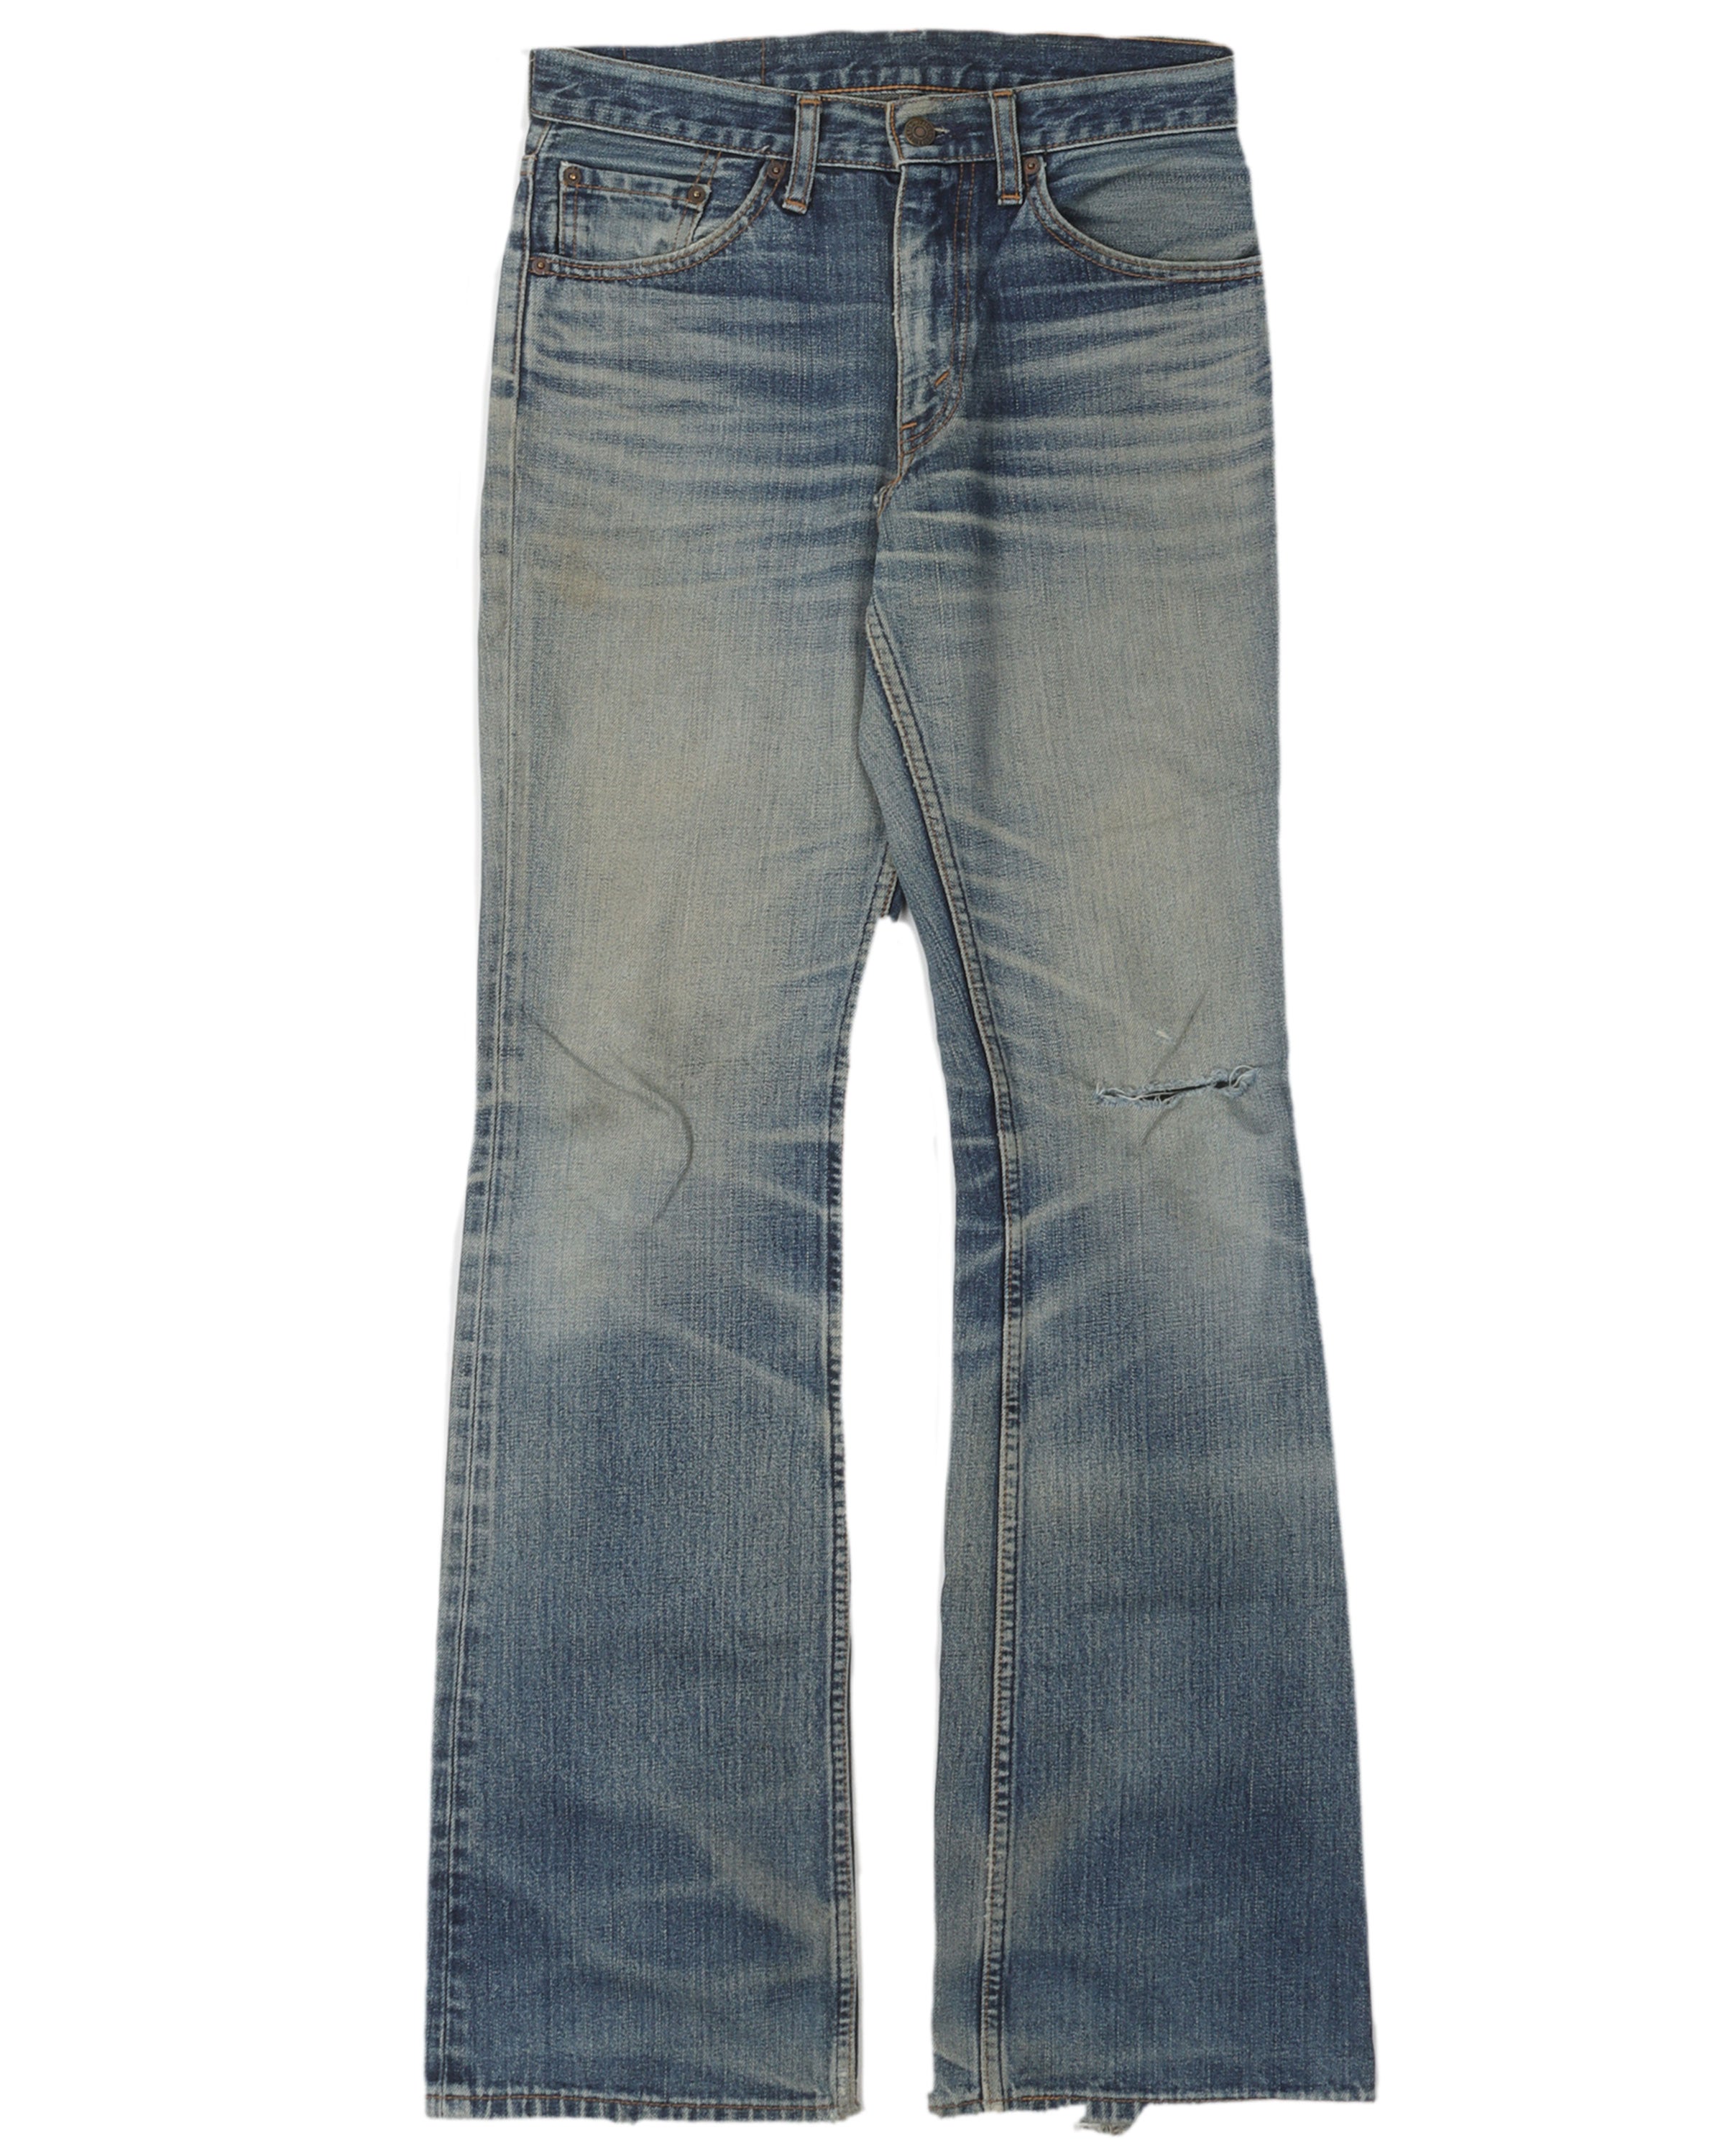 Levi's Distressed 517 Jeans